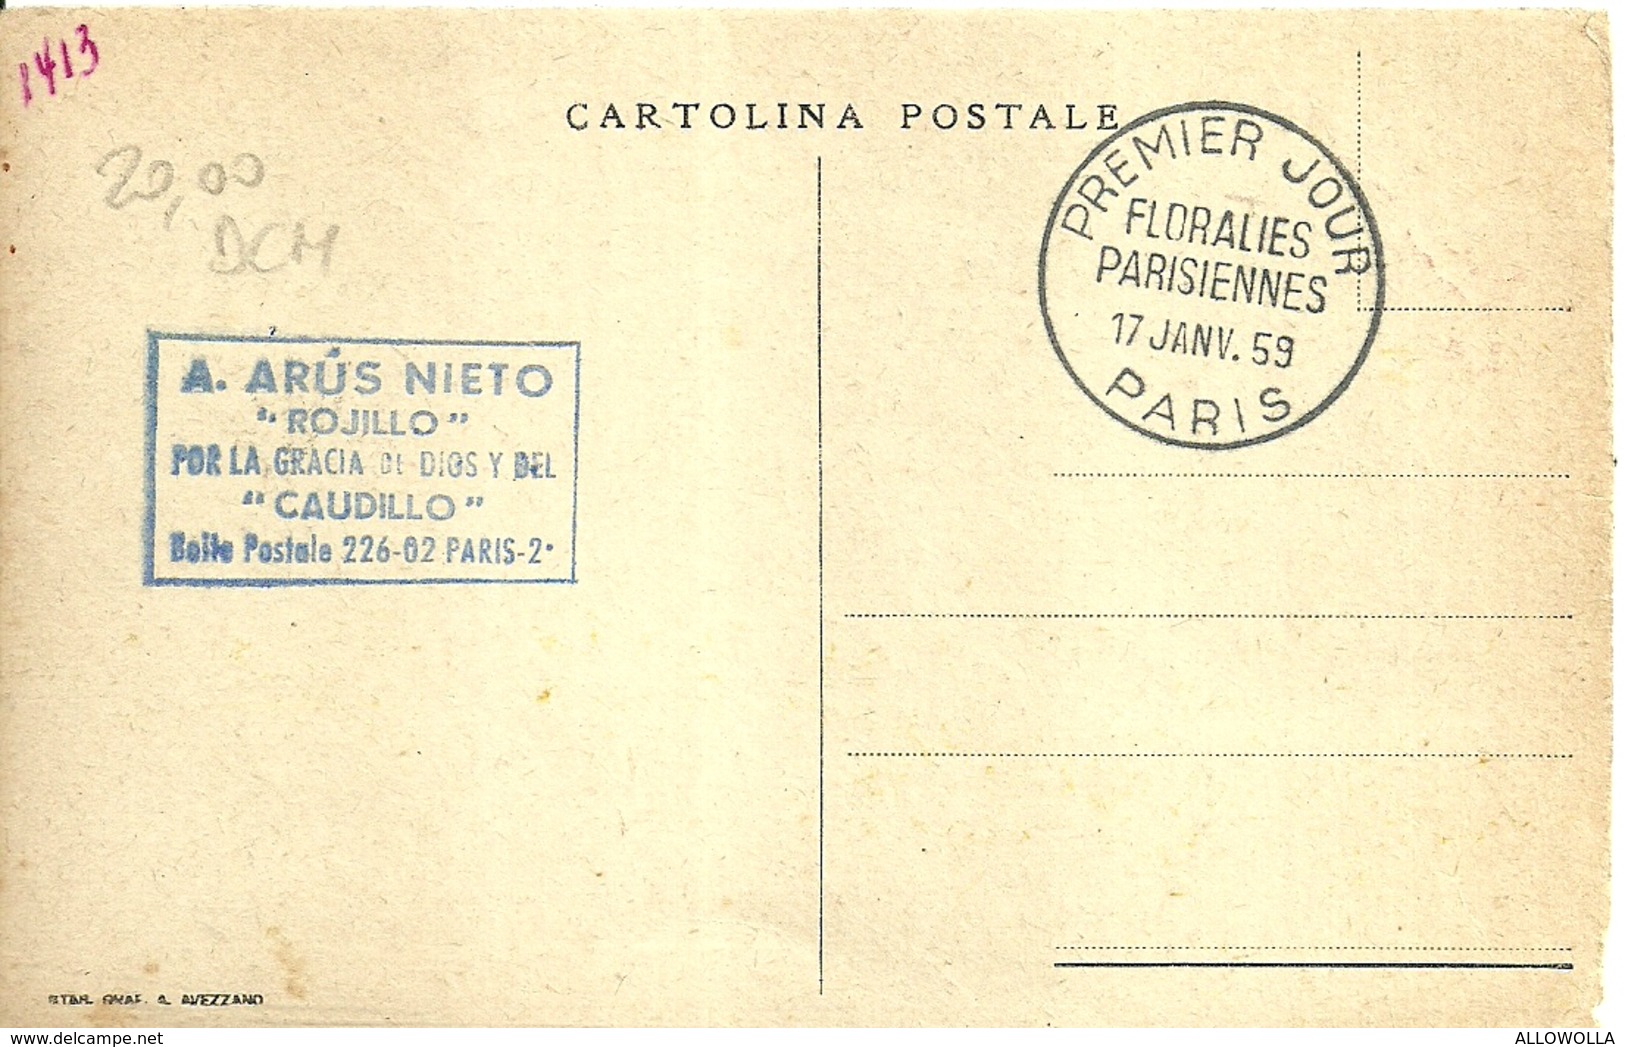 1098 " PREMIER JOUR FLORALIES PARISIENNES 17 JANV. '59-CART. TORINO 1928 " CARTOLINA POSTALE ORIGINALE SPEDITA - Manifestazioni